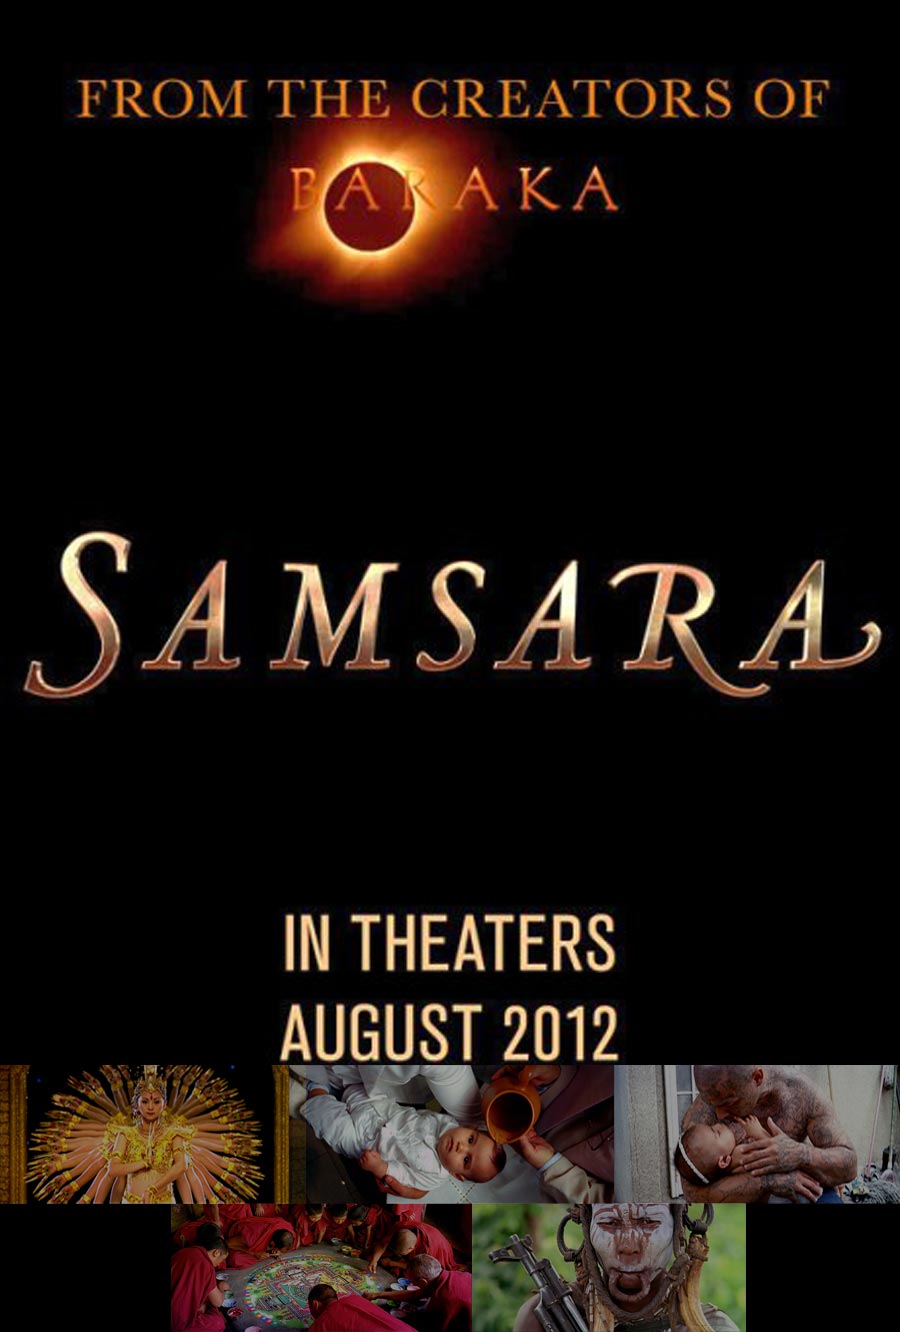 Samsara 2011